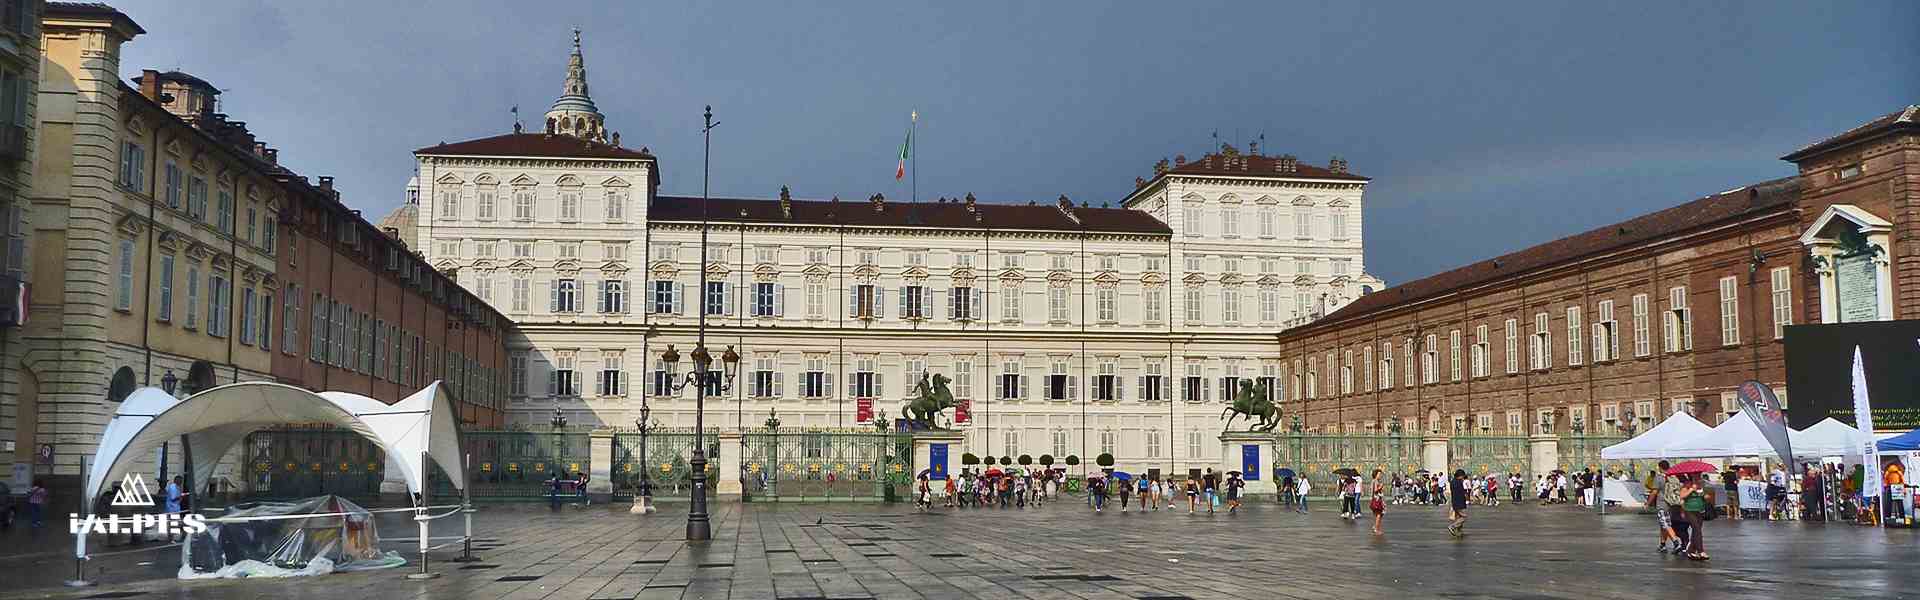 Turin palais Royal, Italie